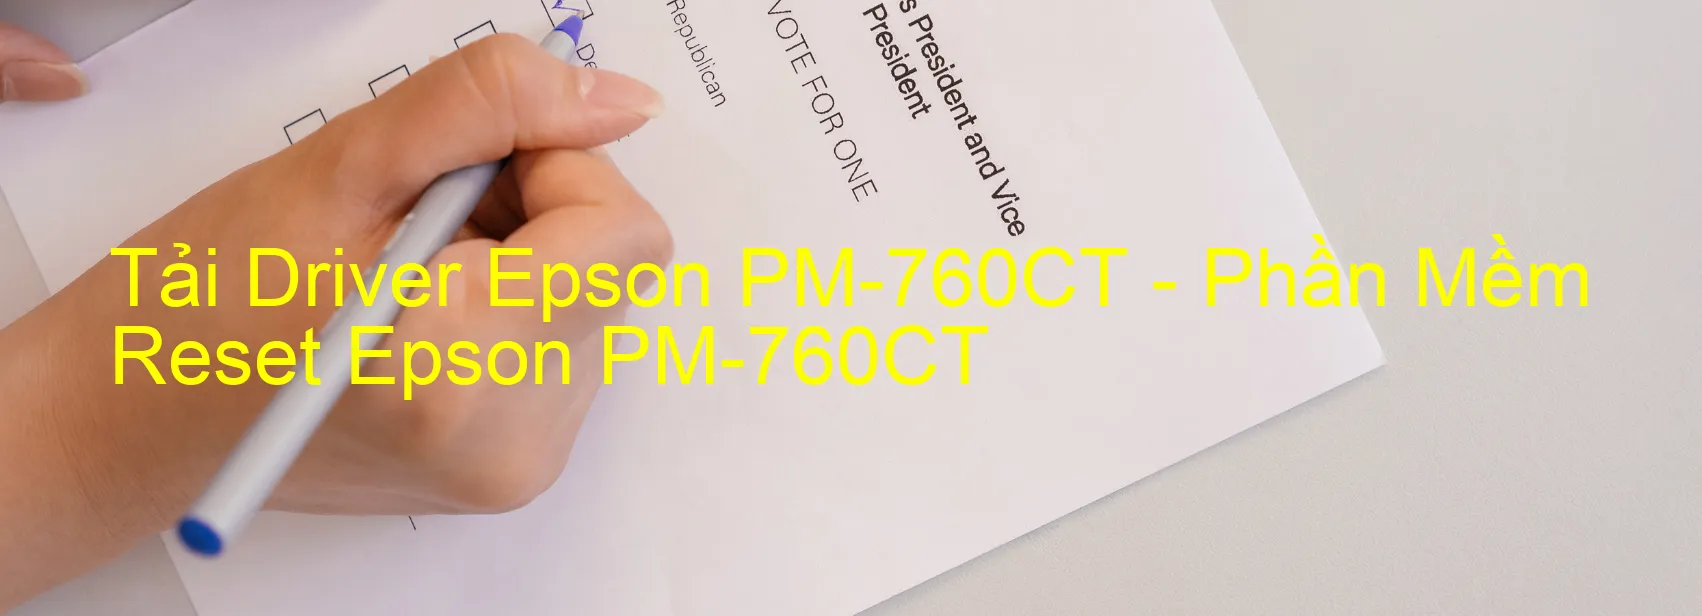 Driver Epson PM-760CT, Phần Mềm Reset Epson PM-760CT